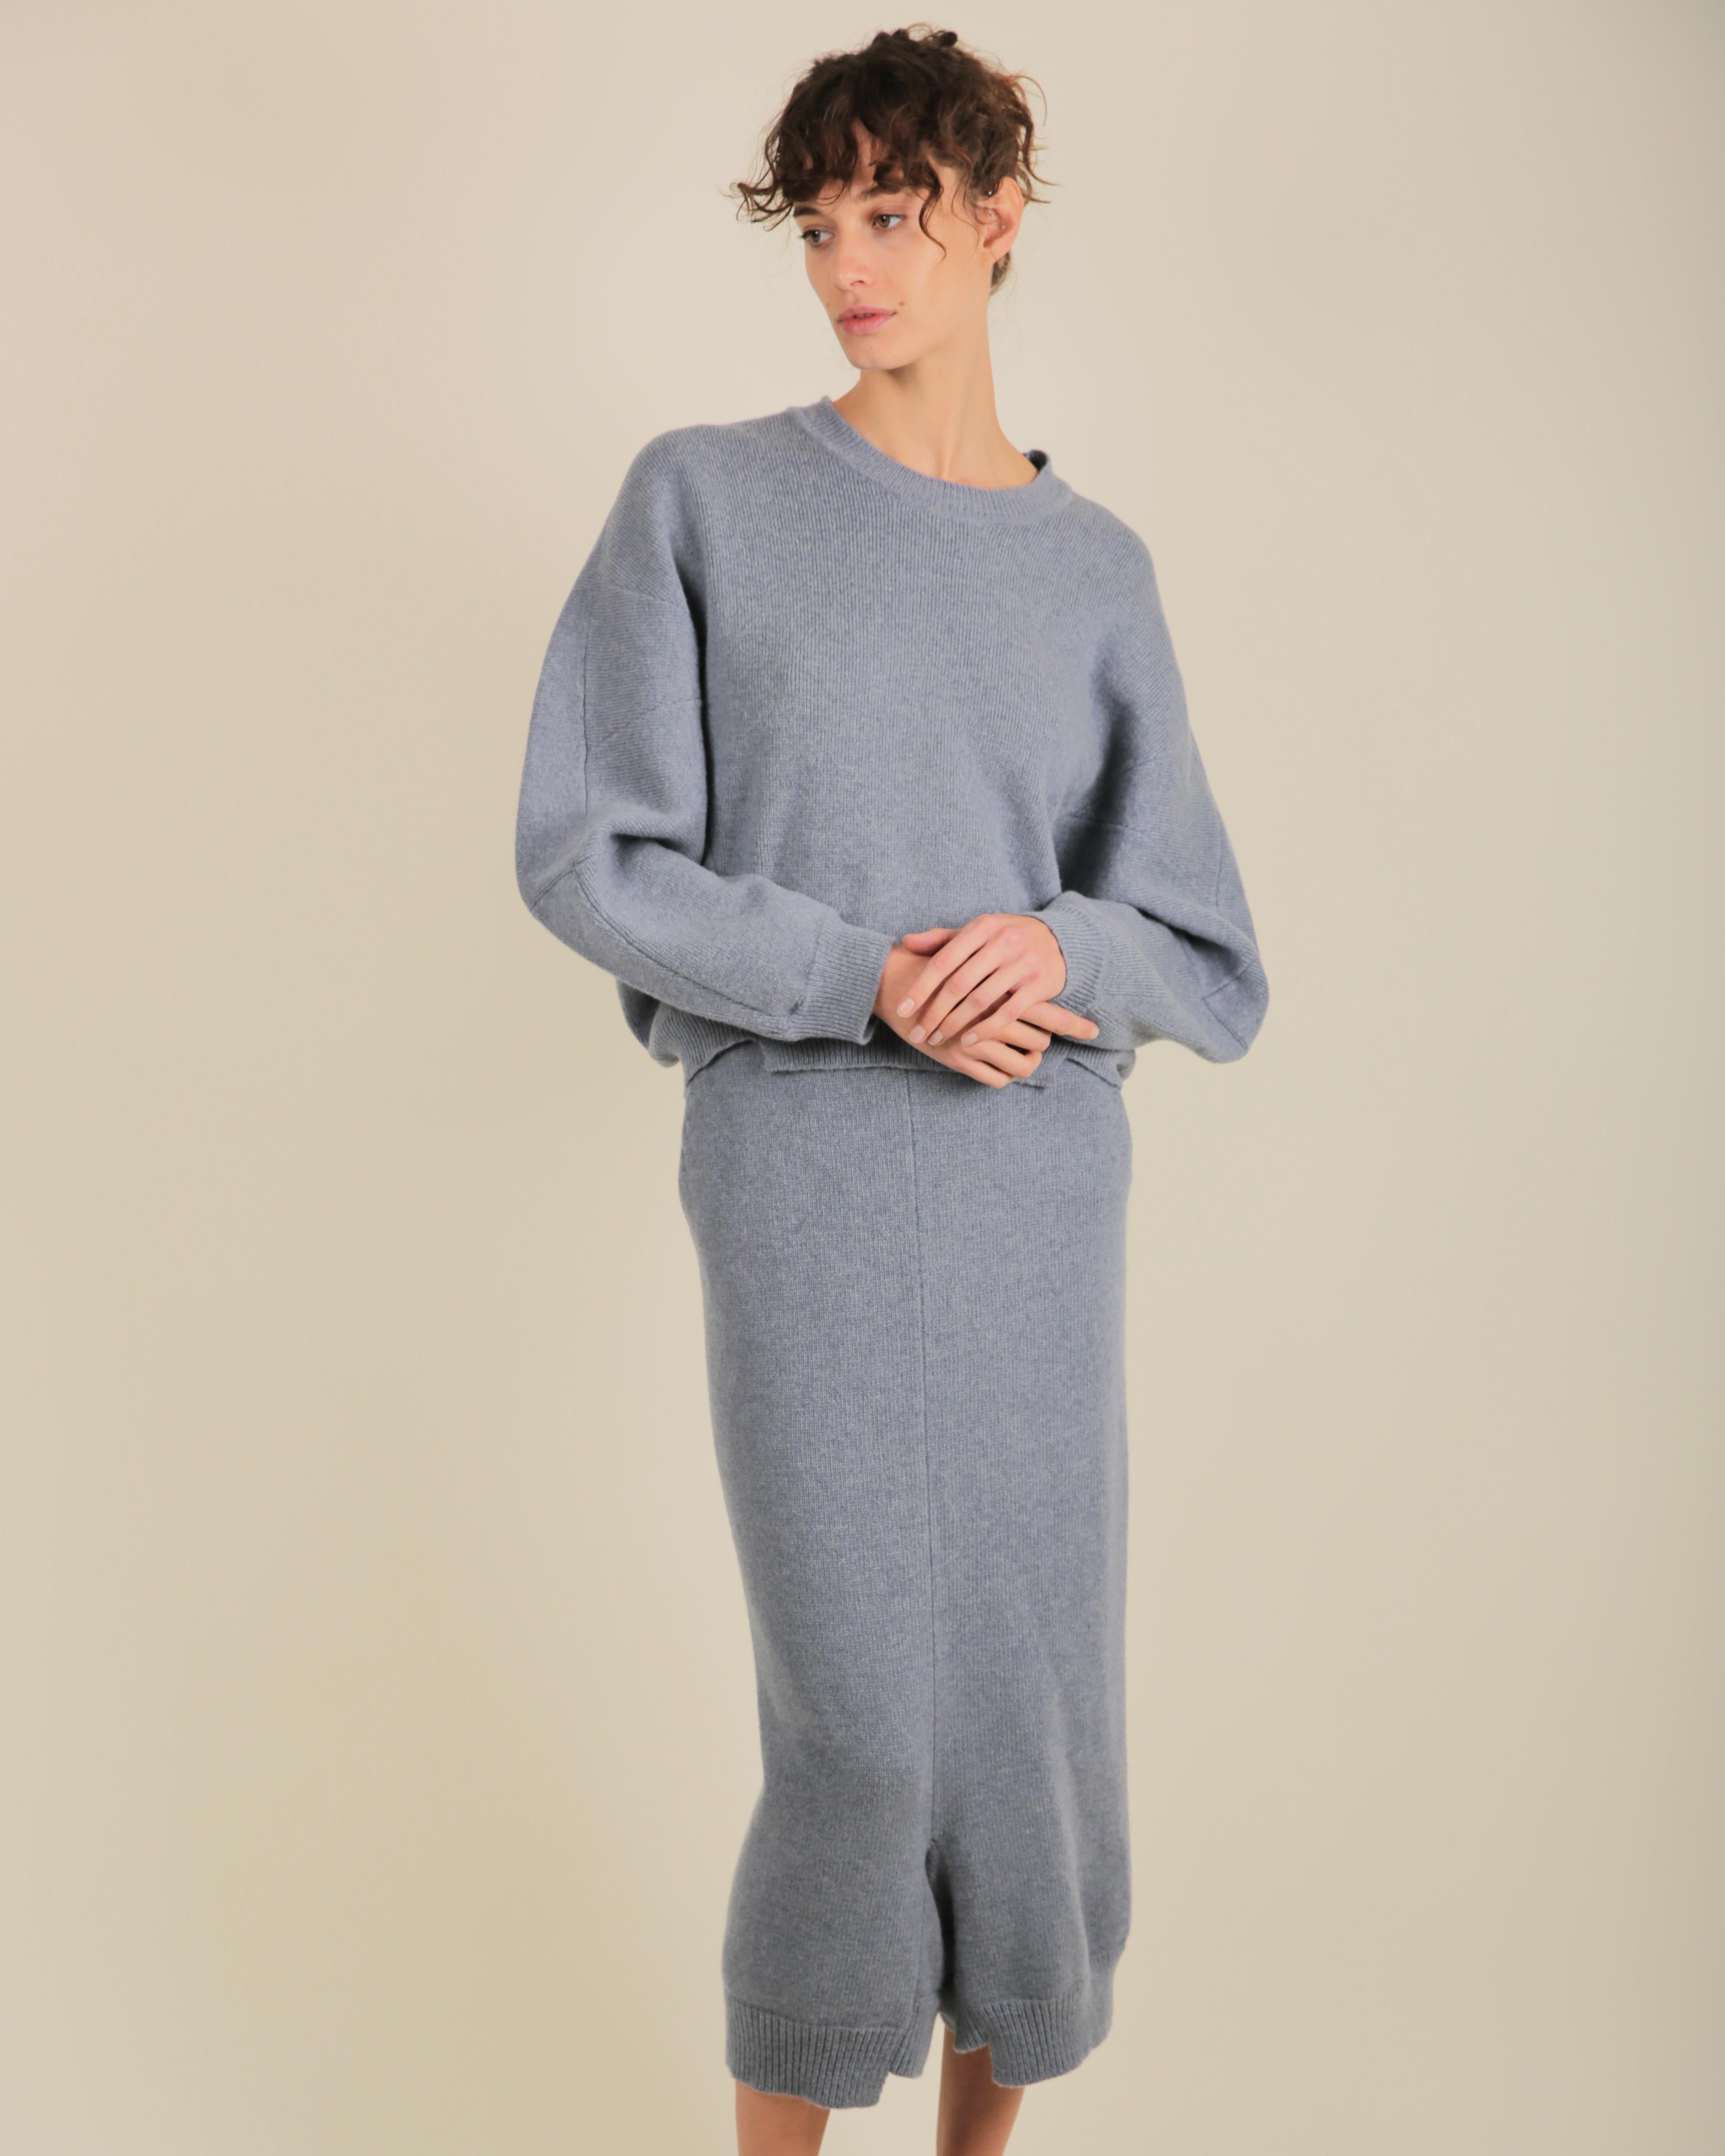 Women's Stella McCartney Fall18 blue oversized wool alpaca matching sweater dress pants For Sale